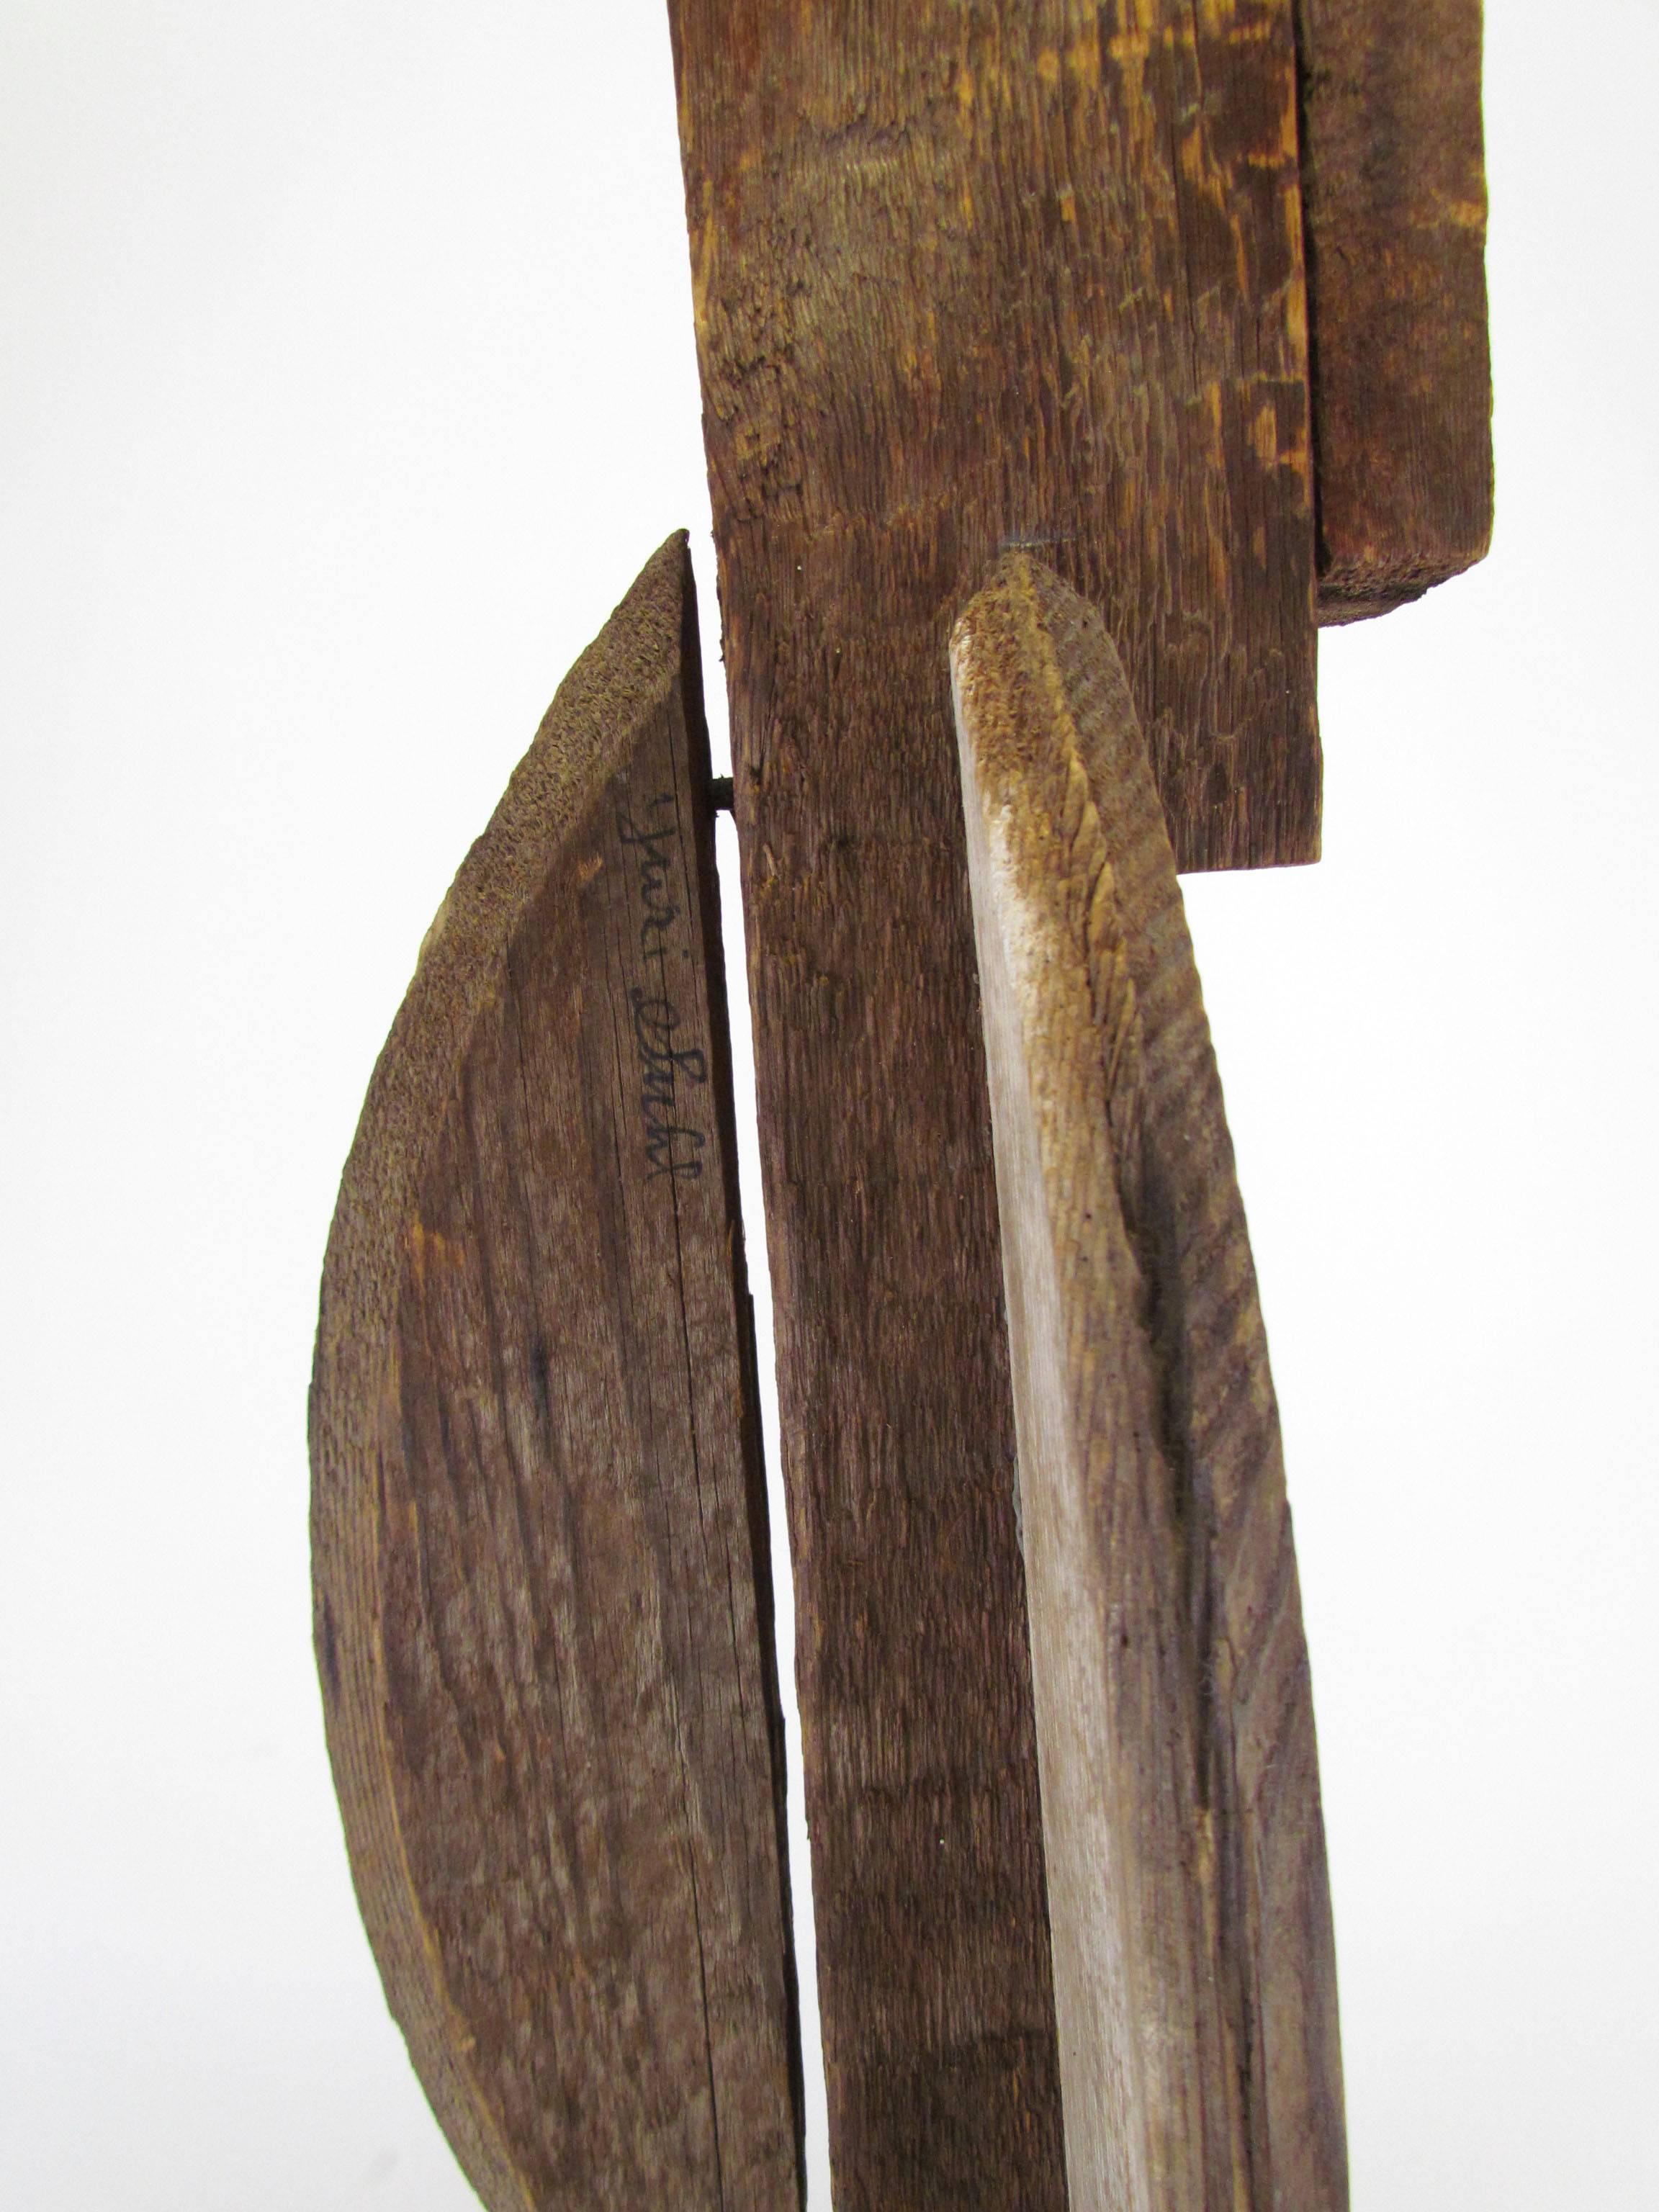 Driftwood Found Wood Folk Art Sculpture by Yuri Suhl, circa 1970s